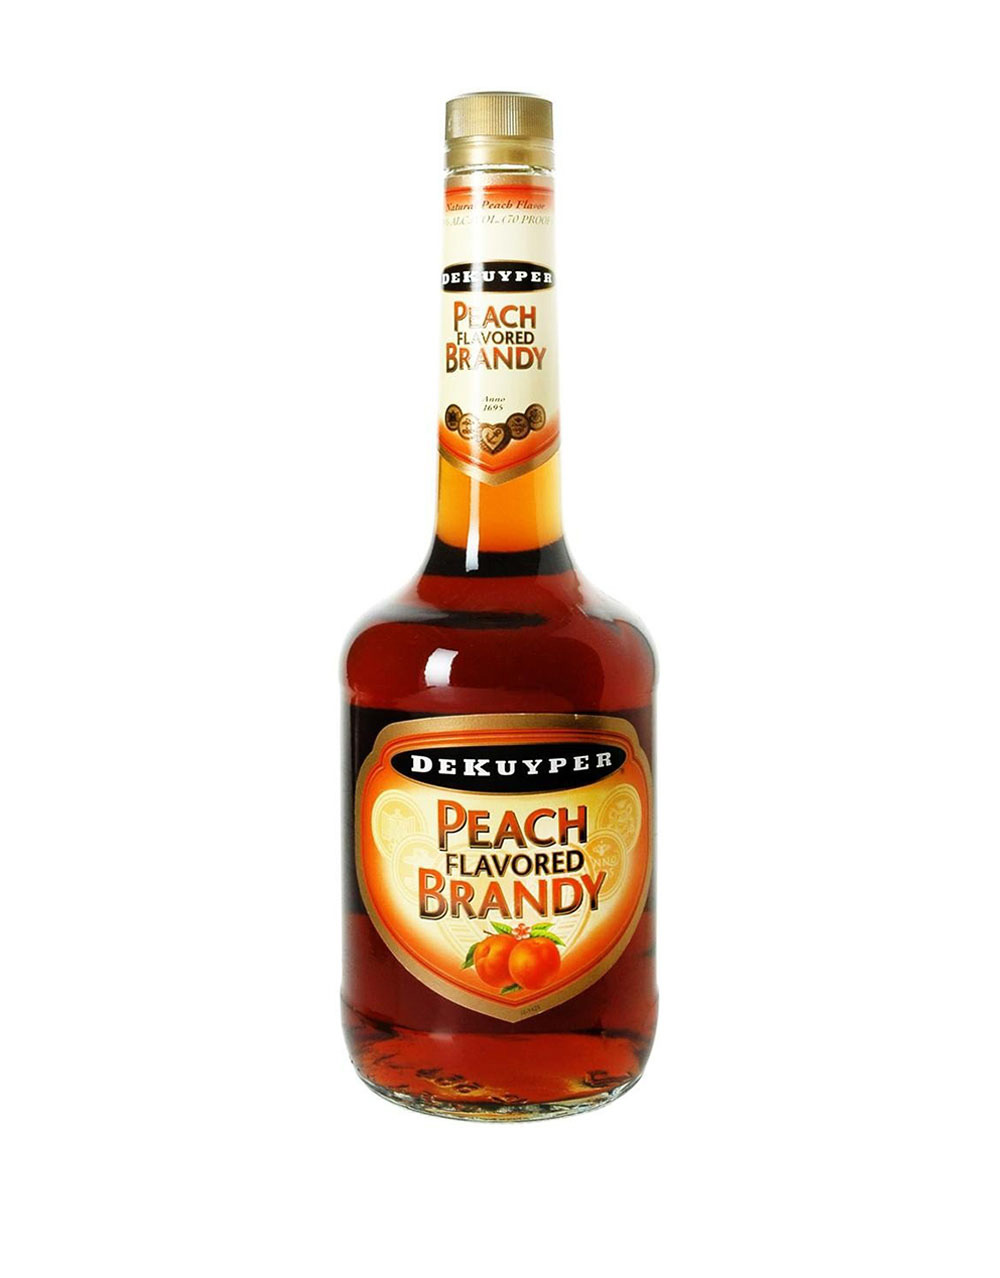 St. George Raspberry Brandy